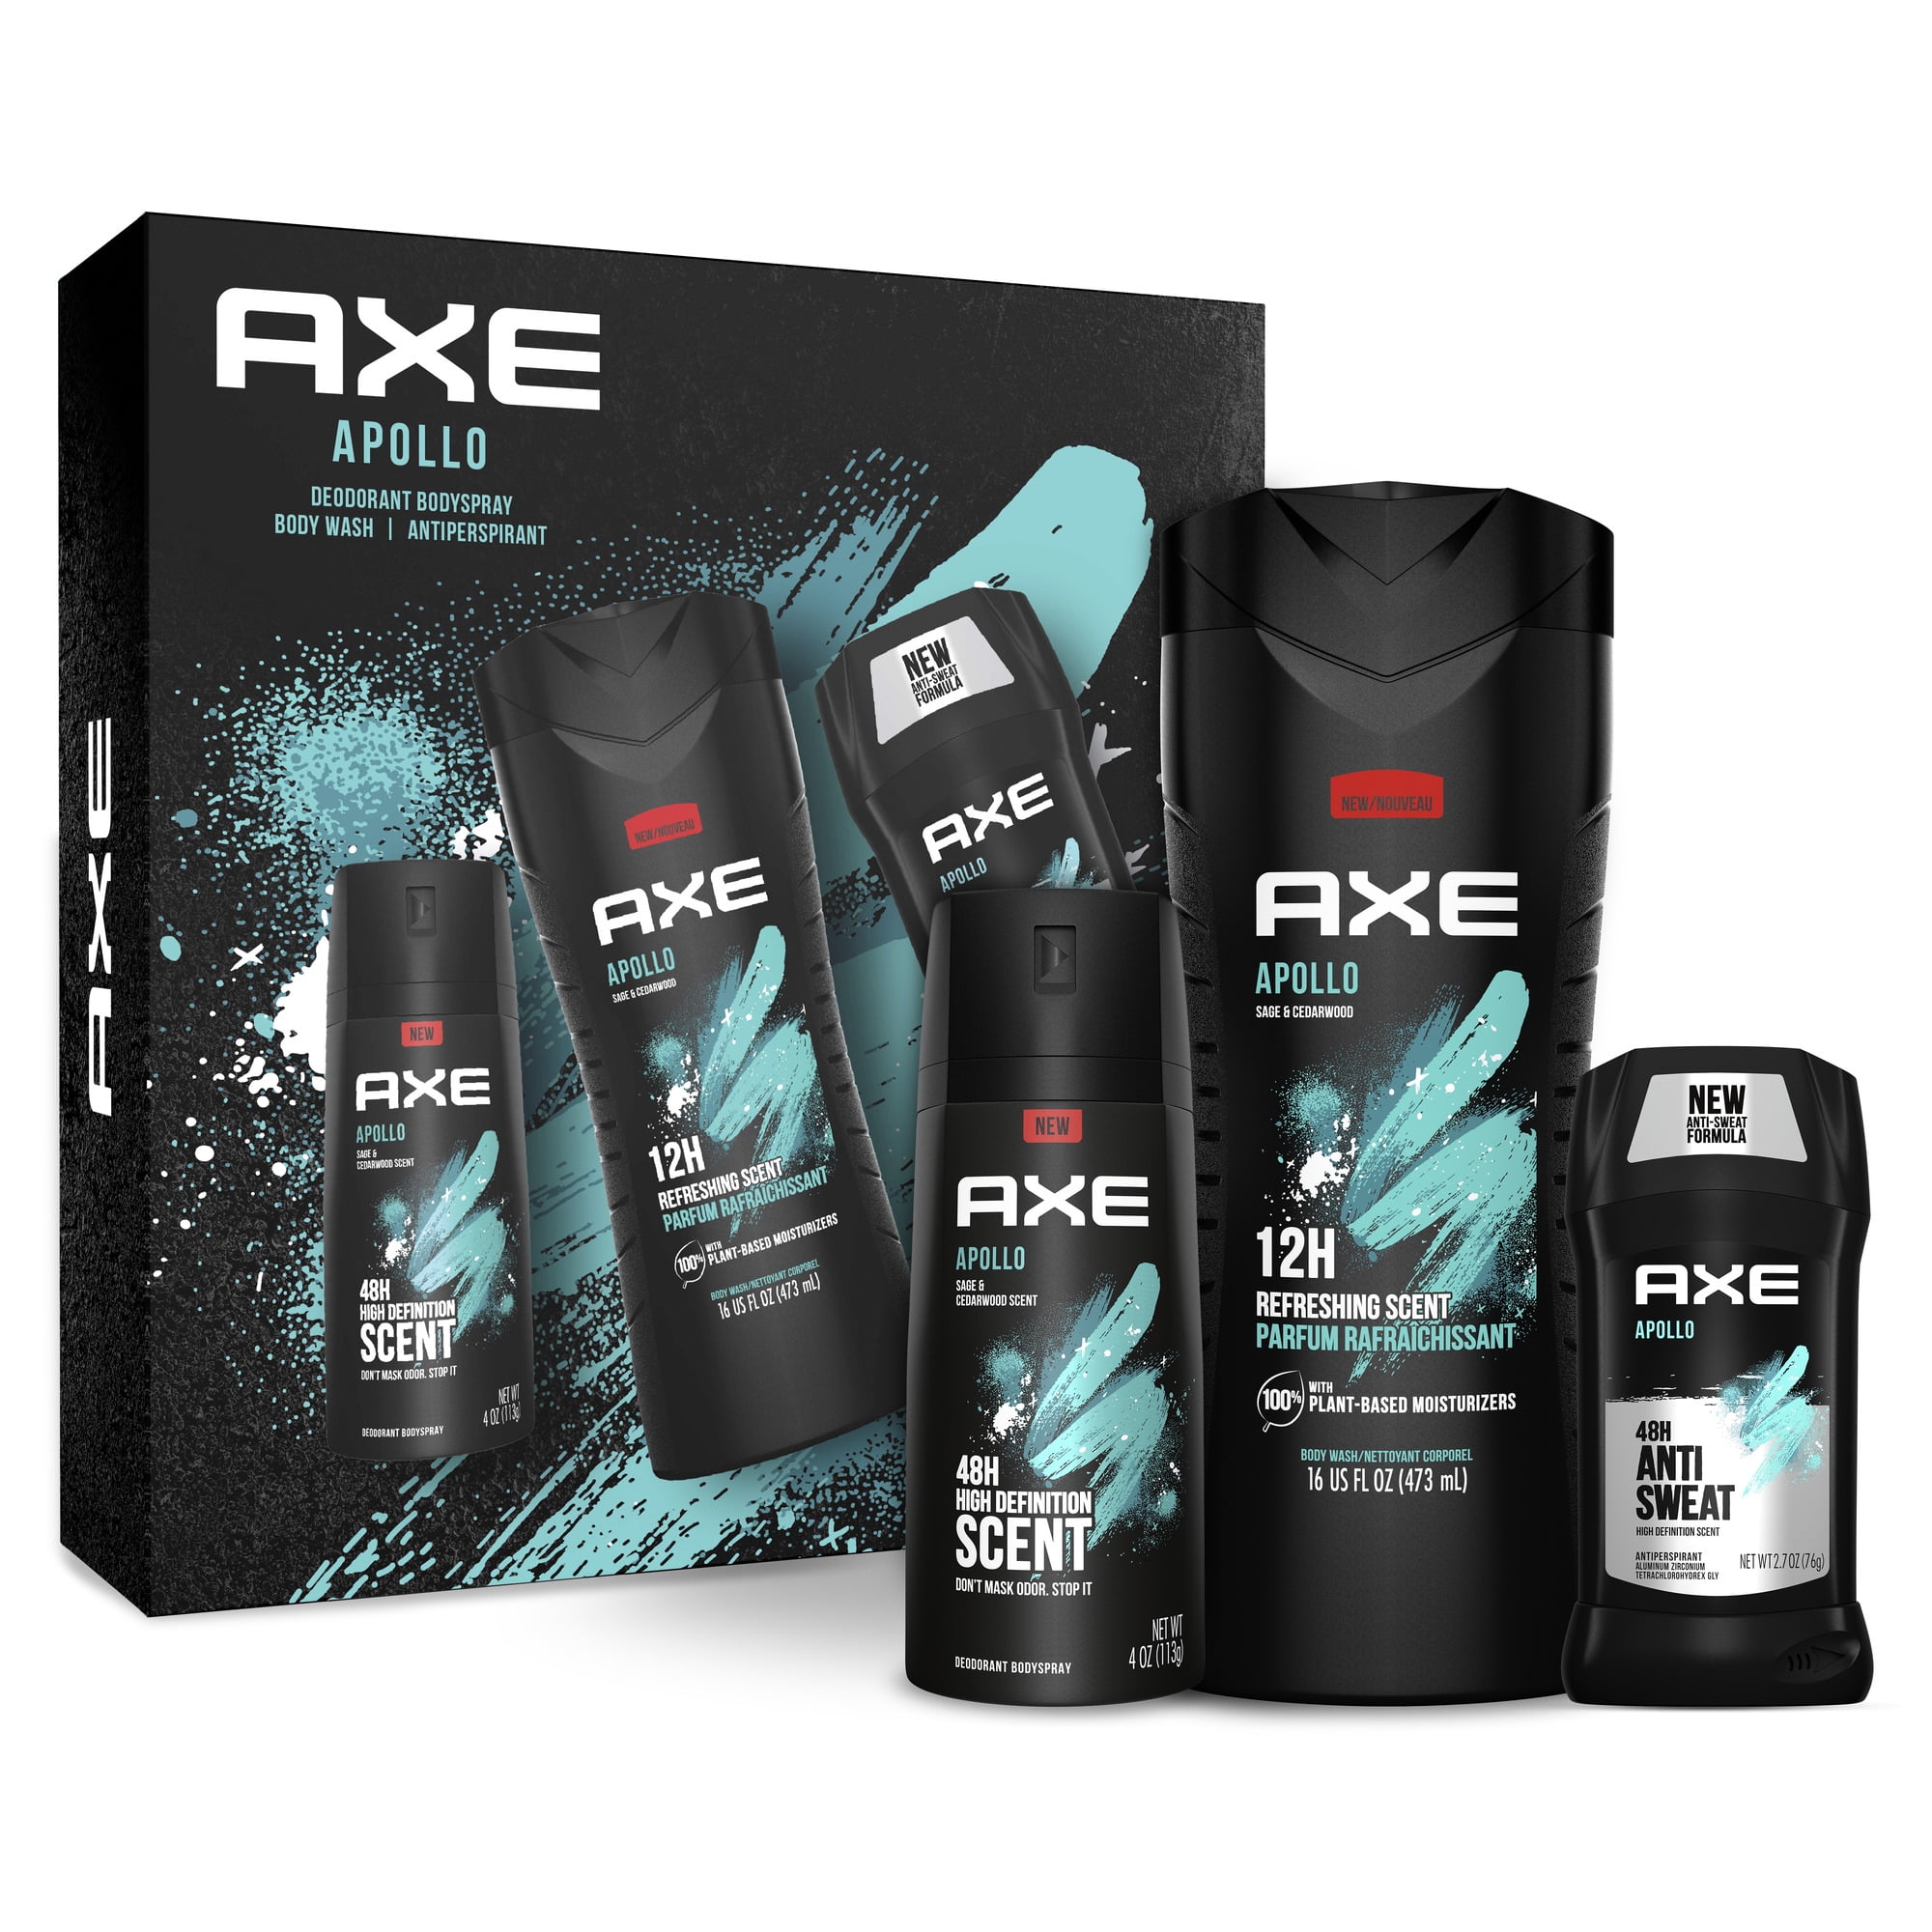 ($13 Value) AXE Apollo Holiday Gift Set (Deo Body Spray, Deo Stick, Body Wash) 3 Ct